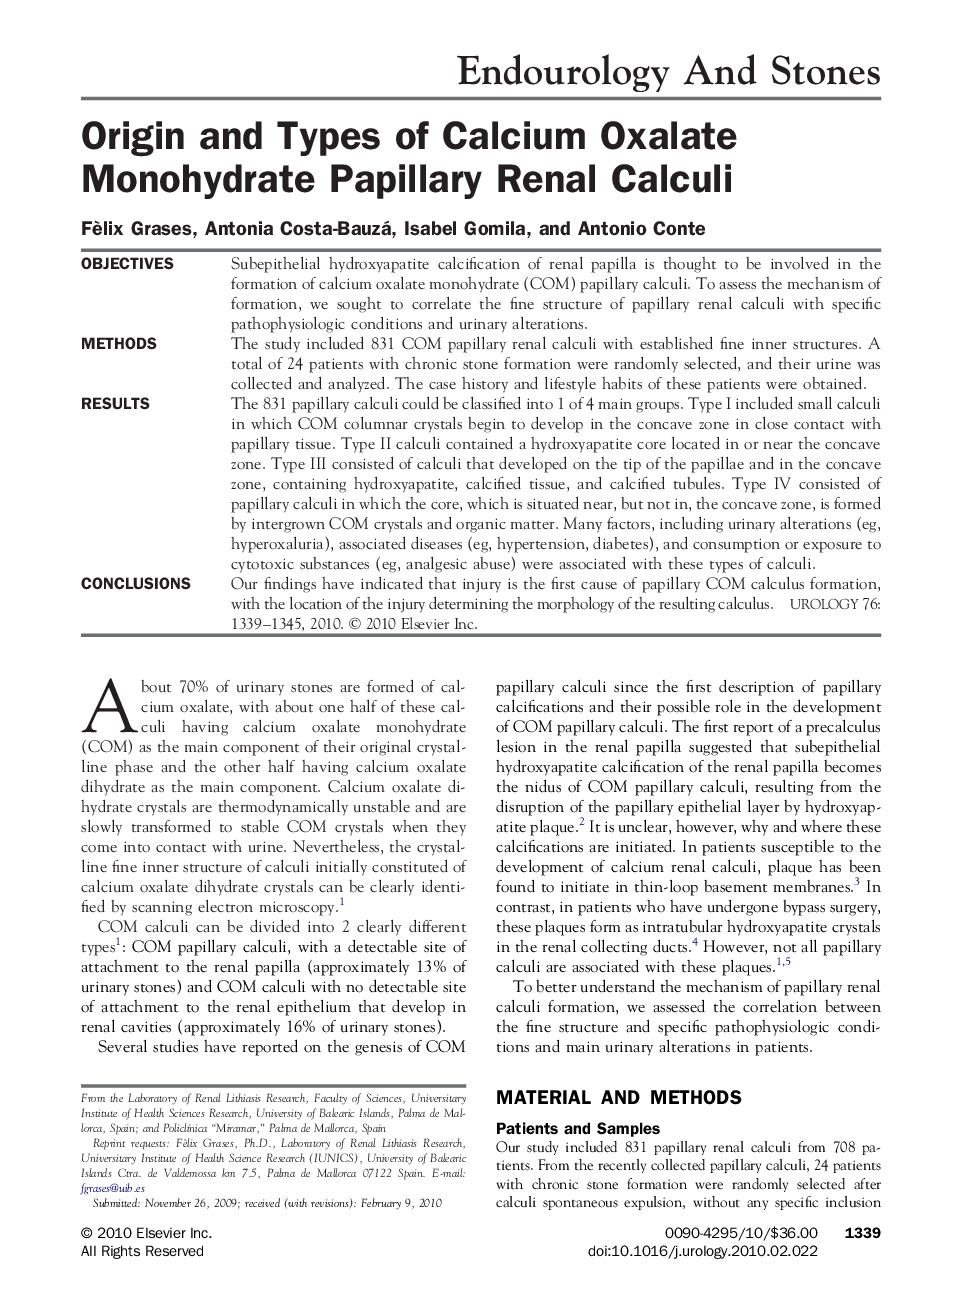 Origin and Types of Calcium Oxalate Monohydrate Papillary Renal Calculi